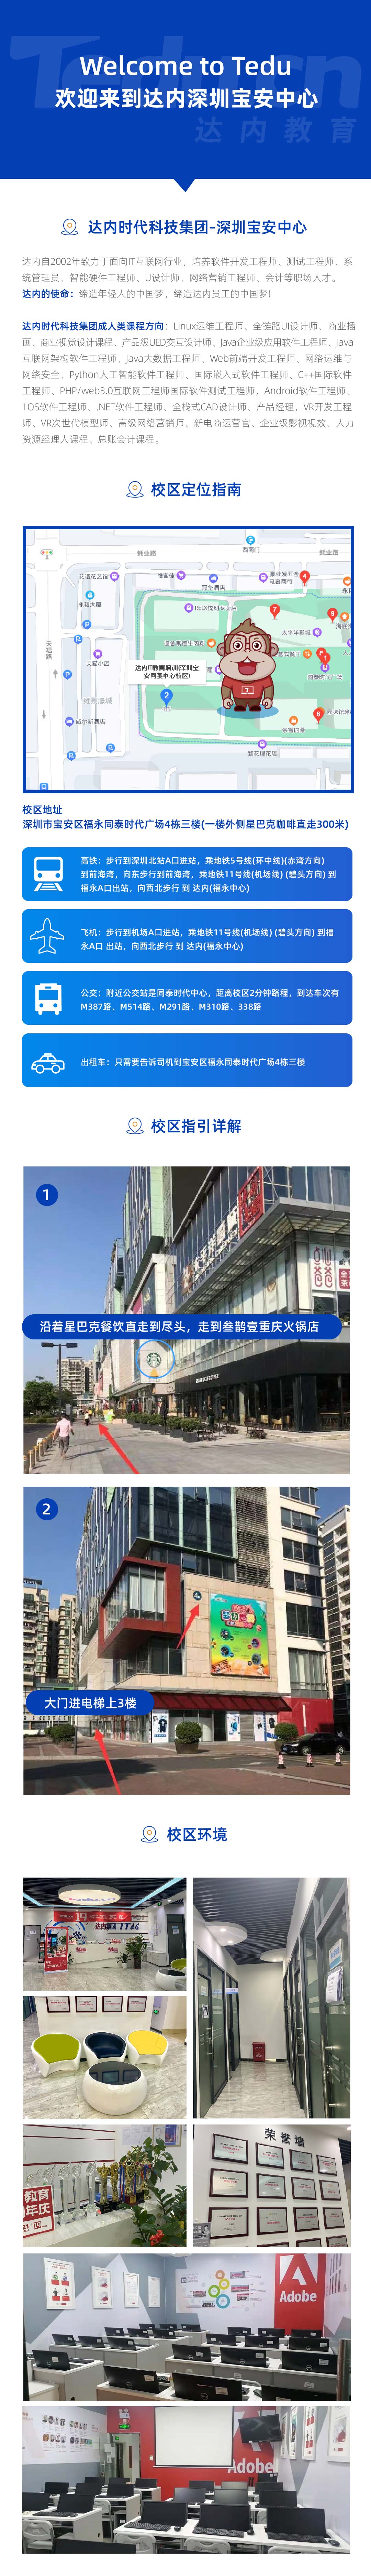 深圳<a style='color:blue' href='//swbp.com.cn/'>達內</a>寶安IT培訓中心